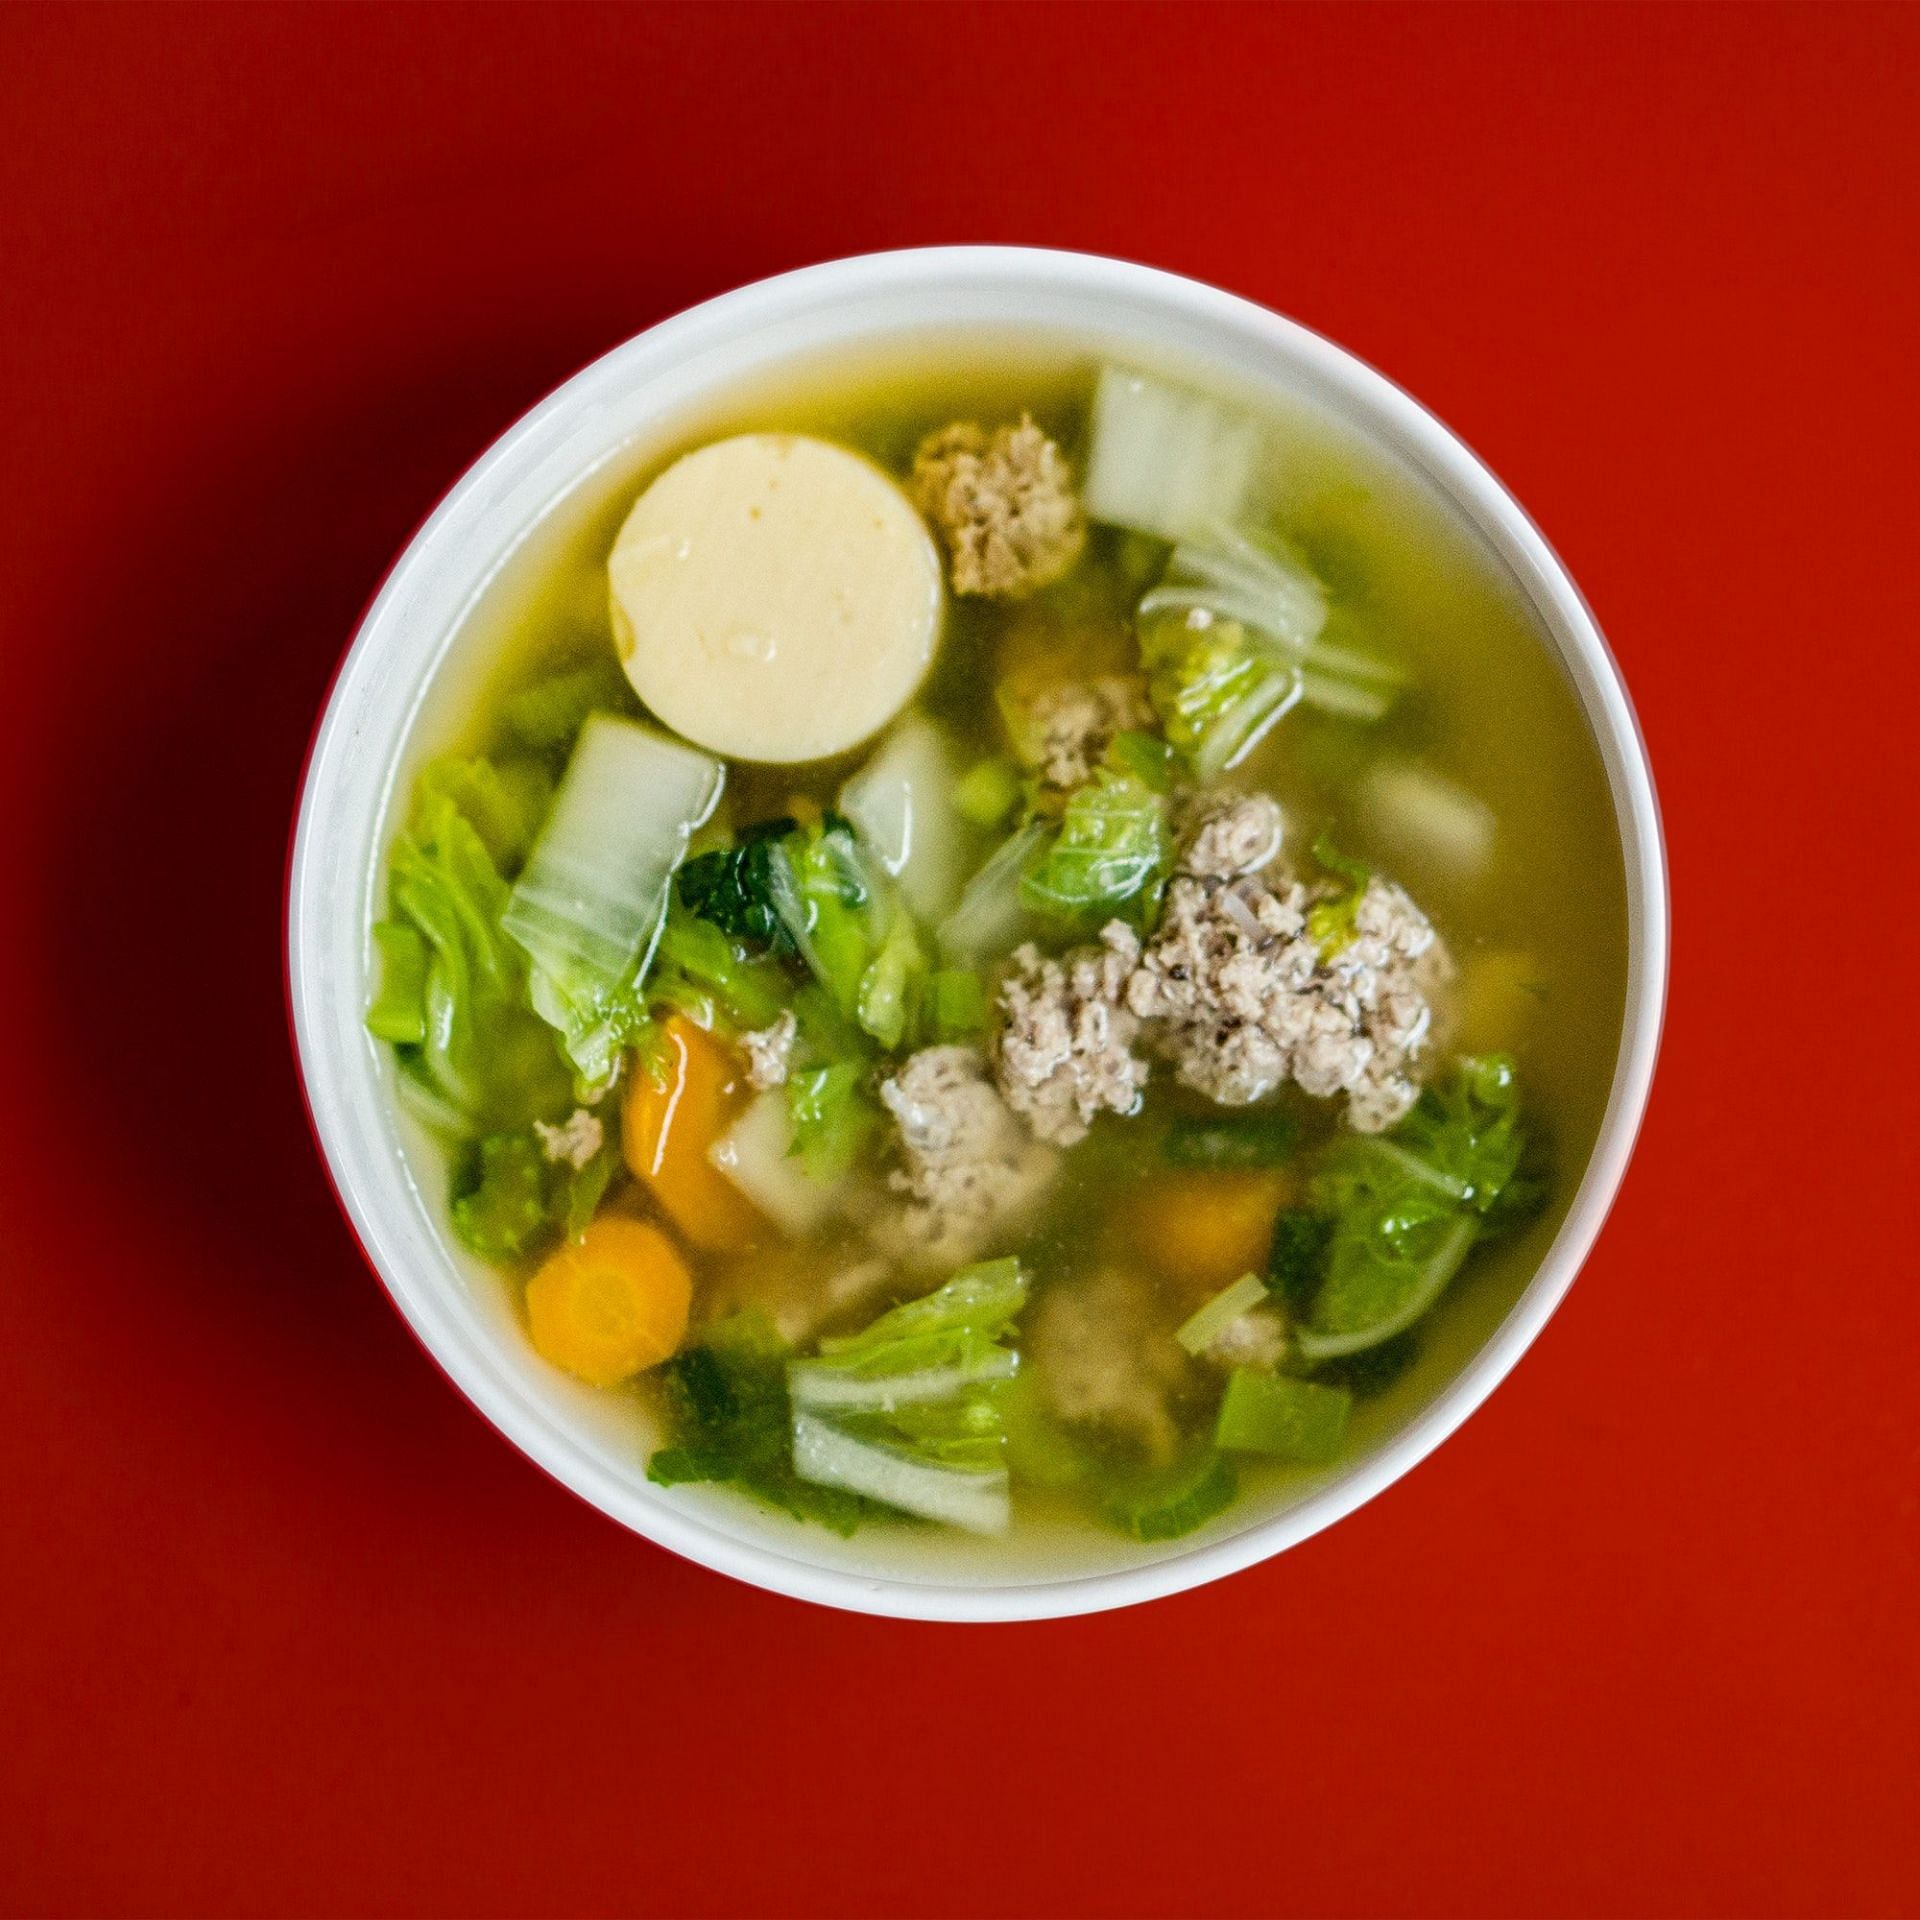 Cabbage soup diet involves consuming a low-calorie cabbage soup for seven days. (Image via Pexels)